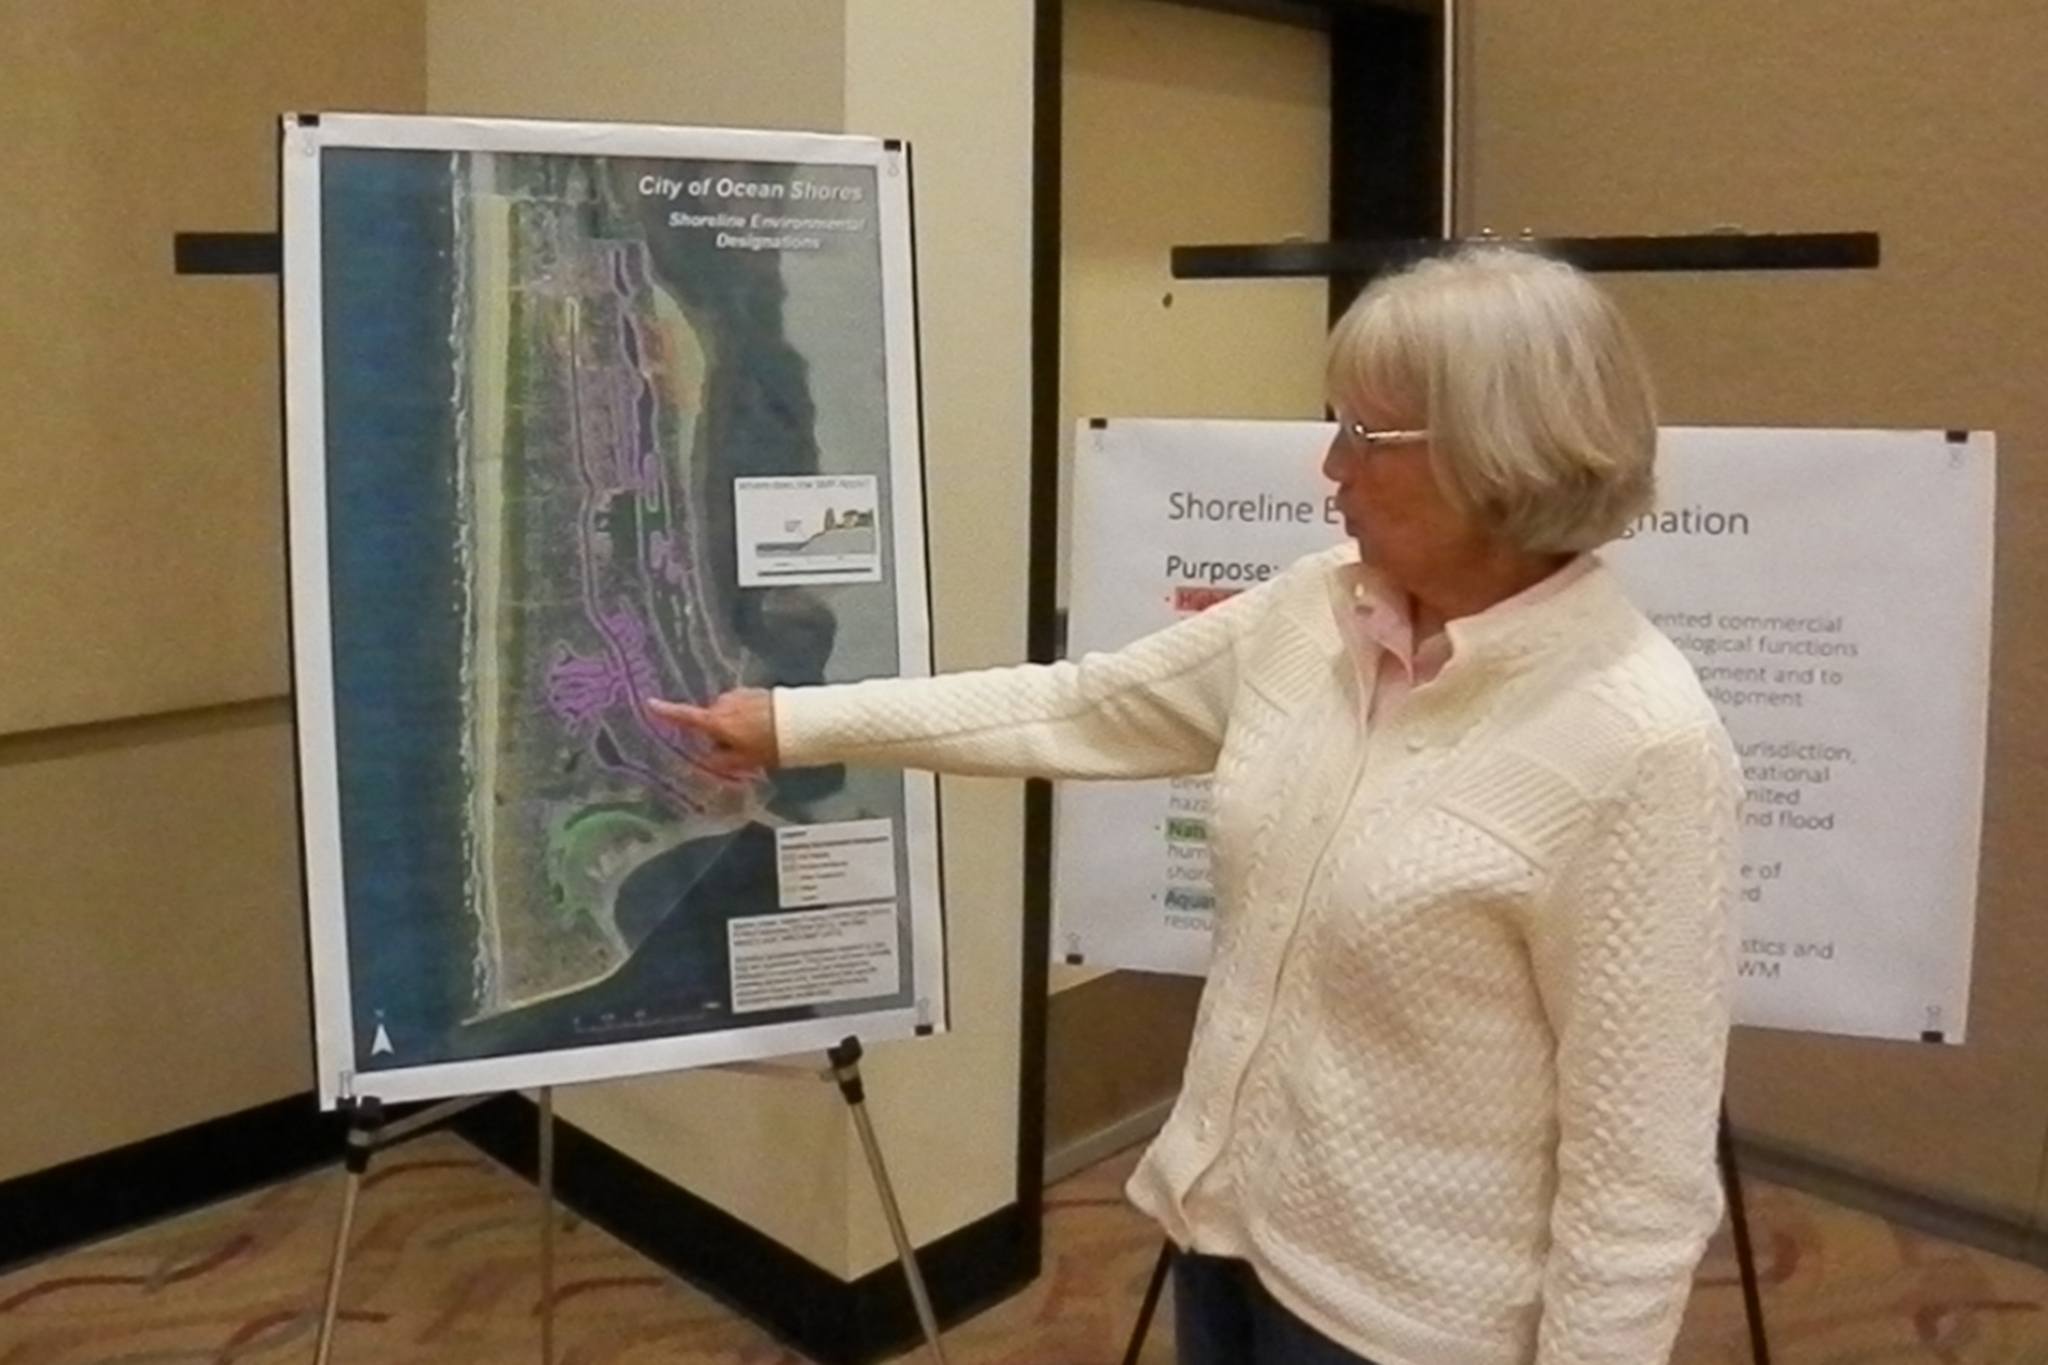 Shoreline plan sets new designations for Ocean Shores